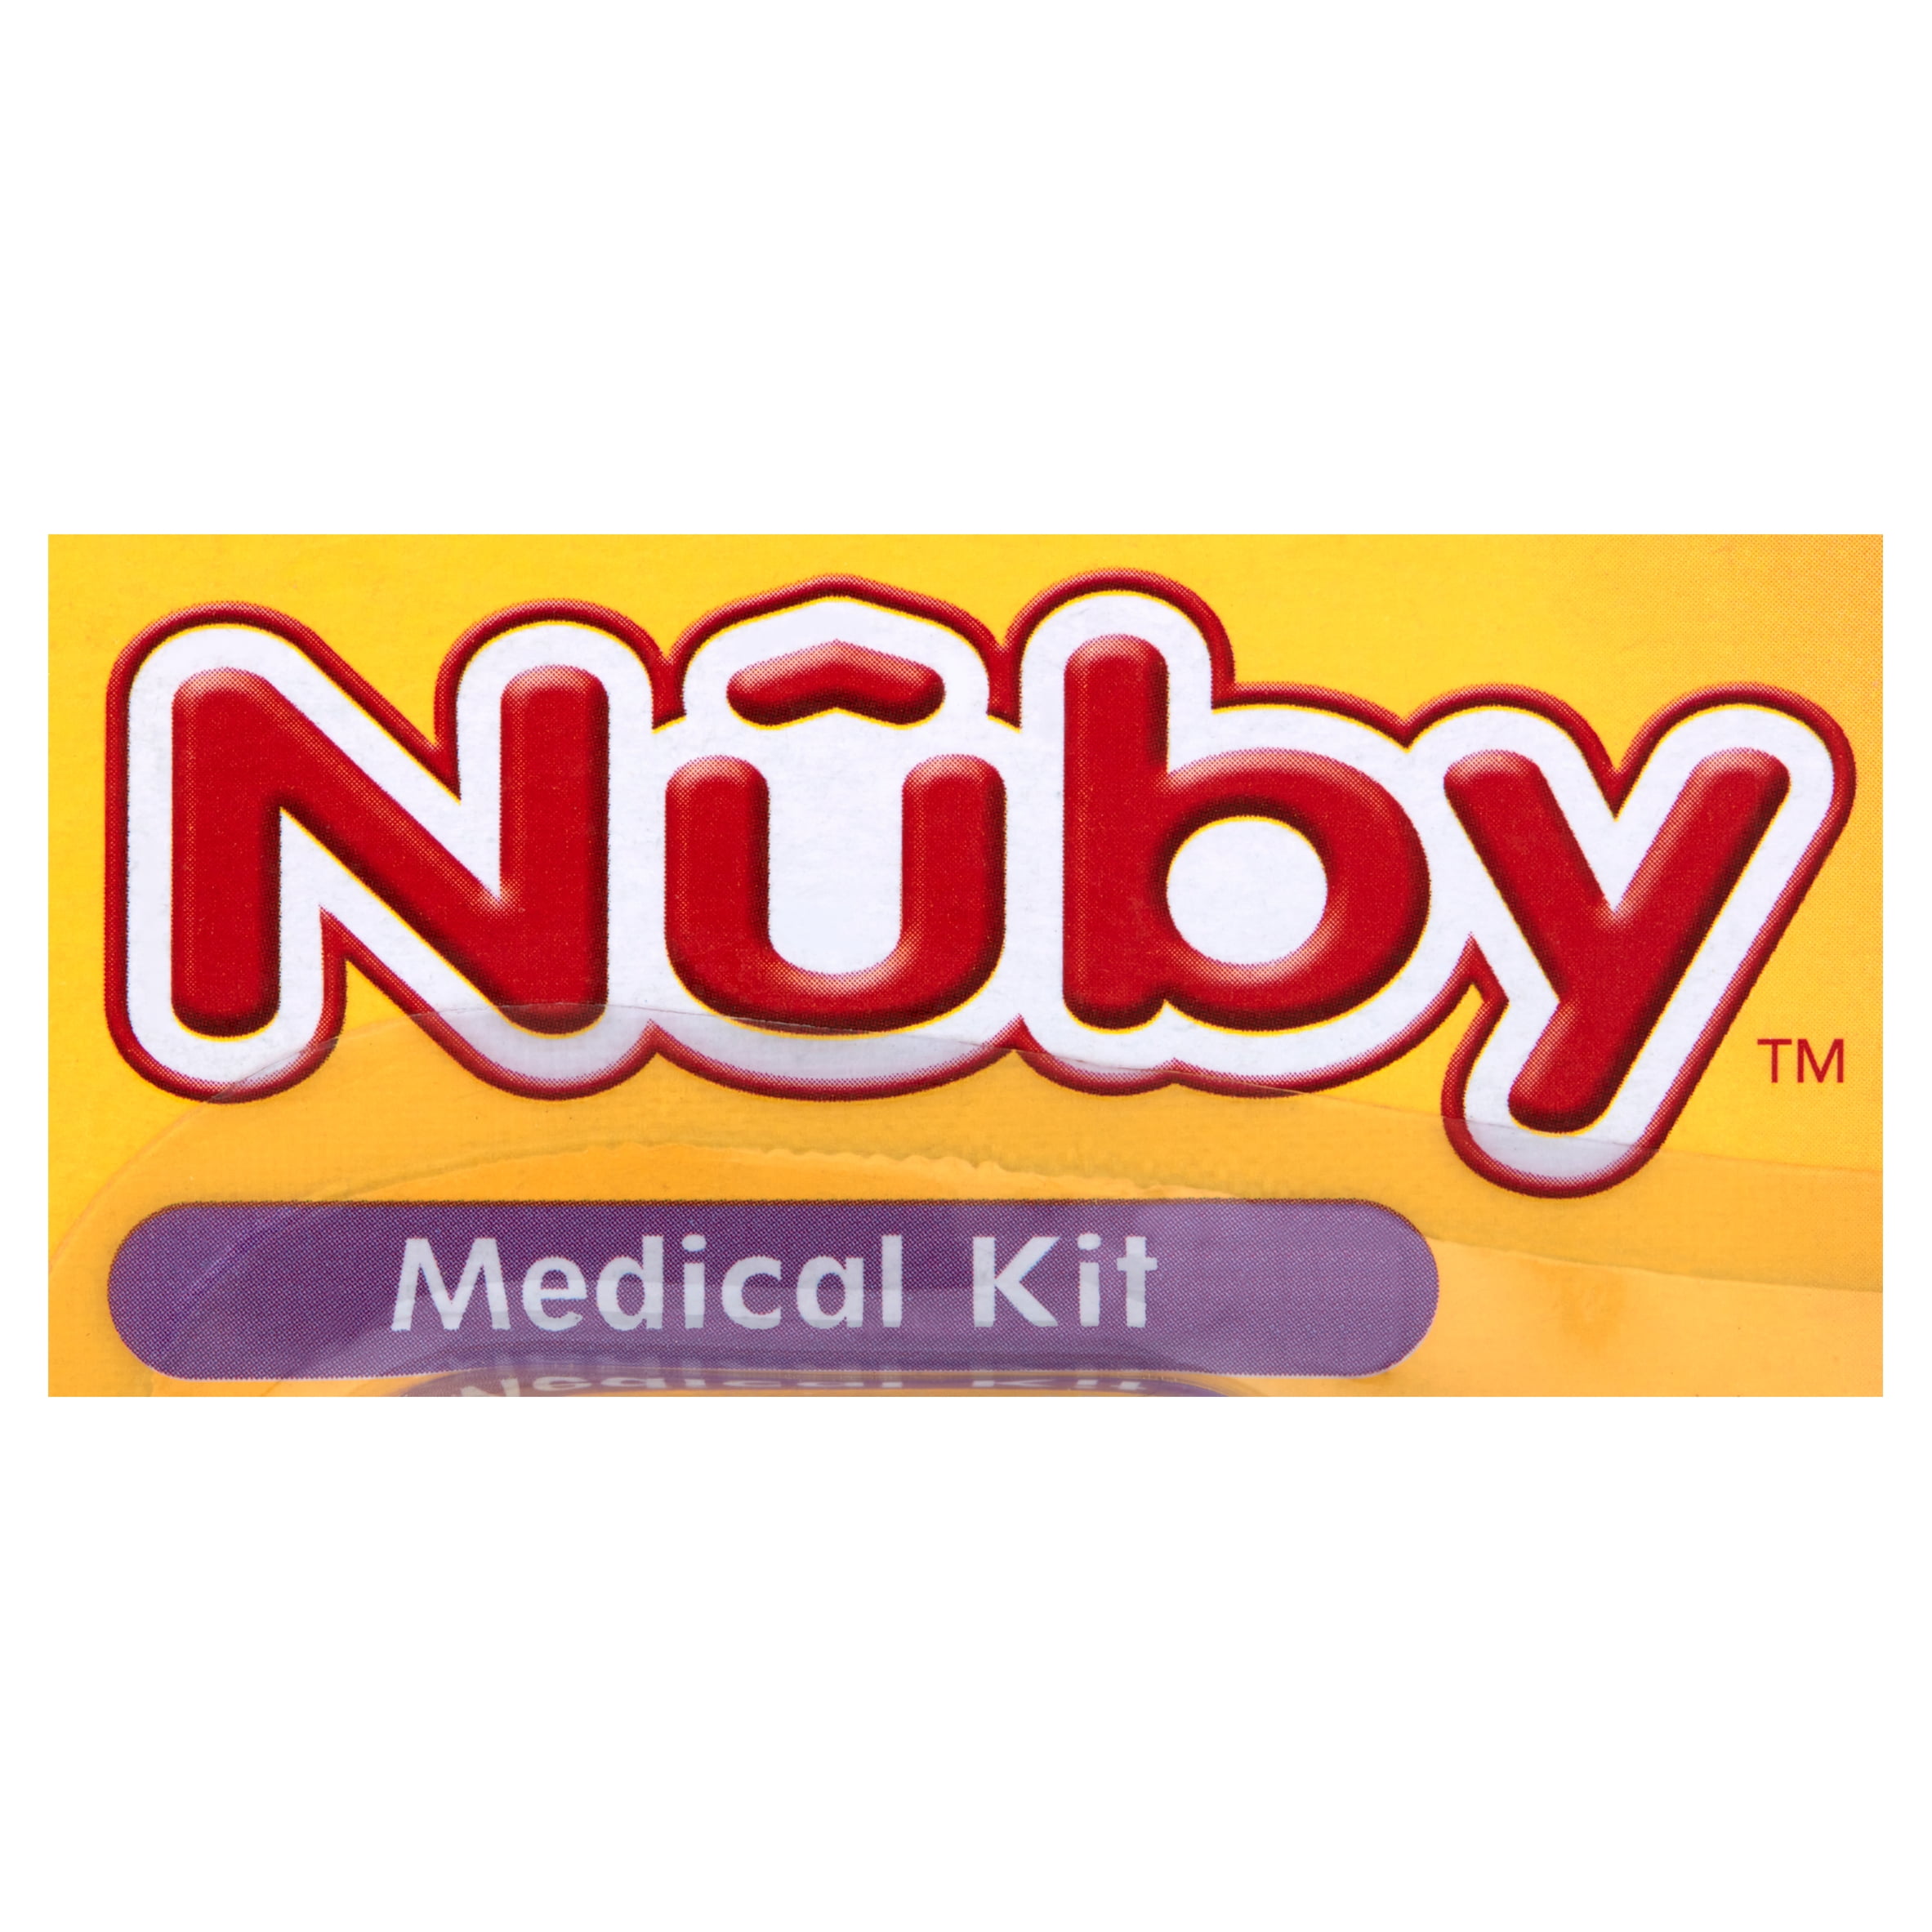 NUBY - Our NUBY Medical Kit includes Sure-Dose™ medicine